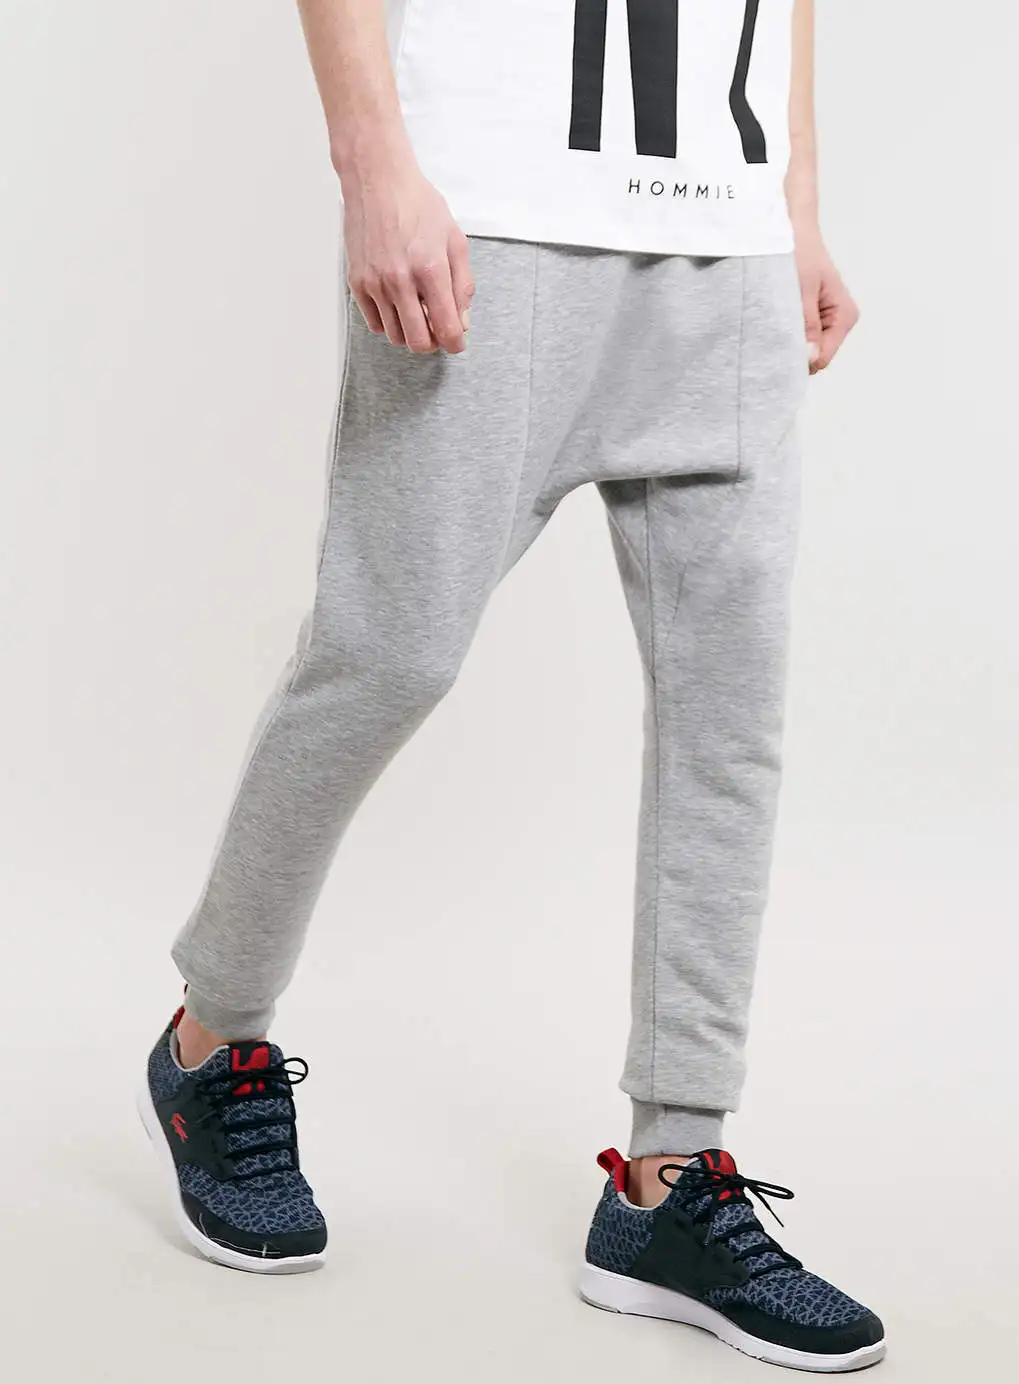 mens gray jogging pants